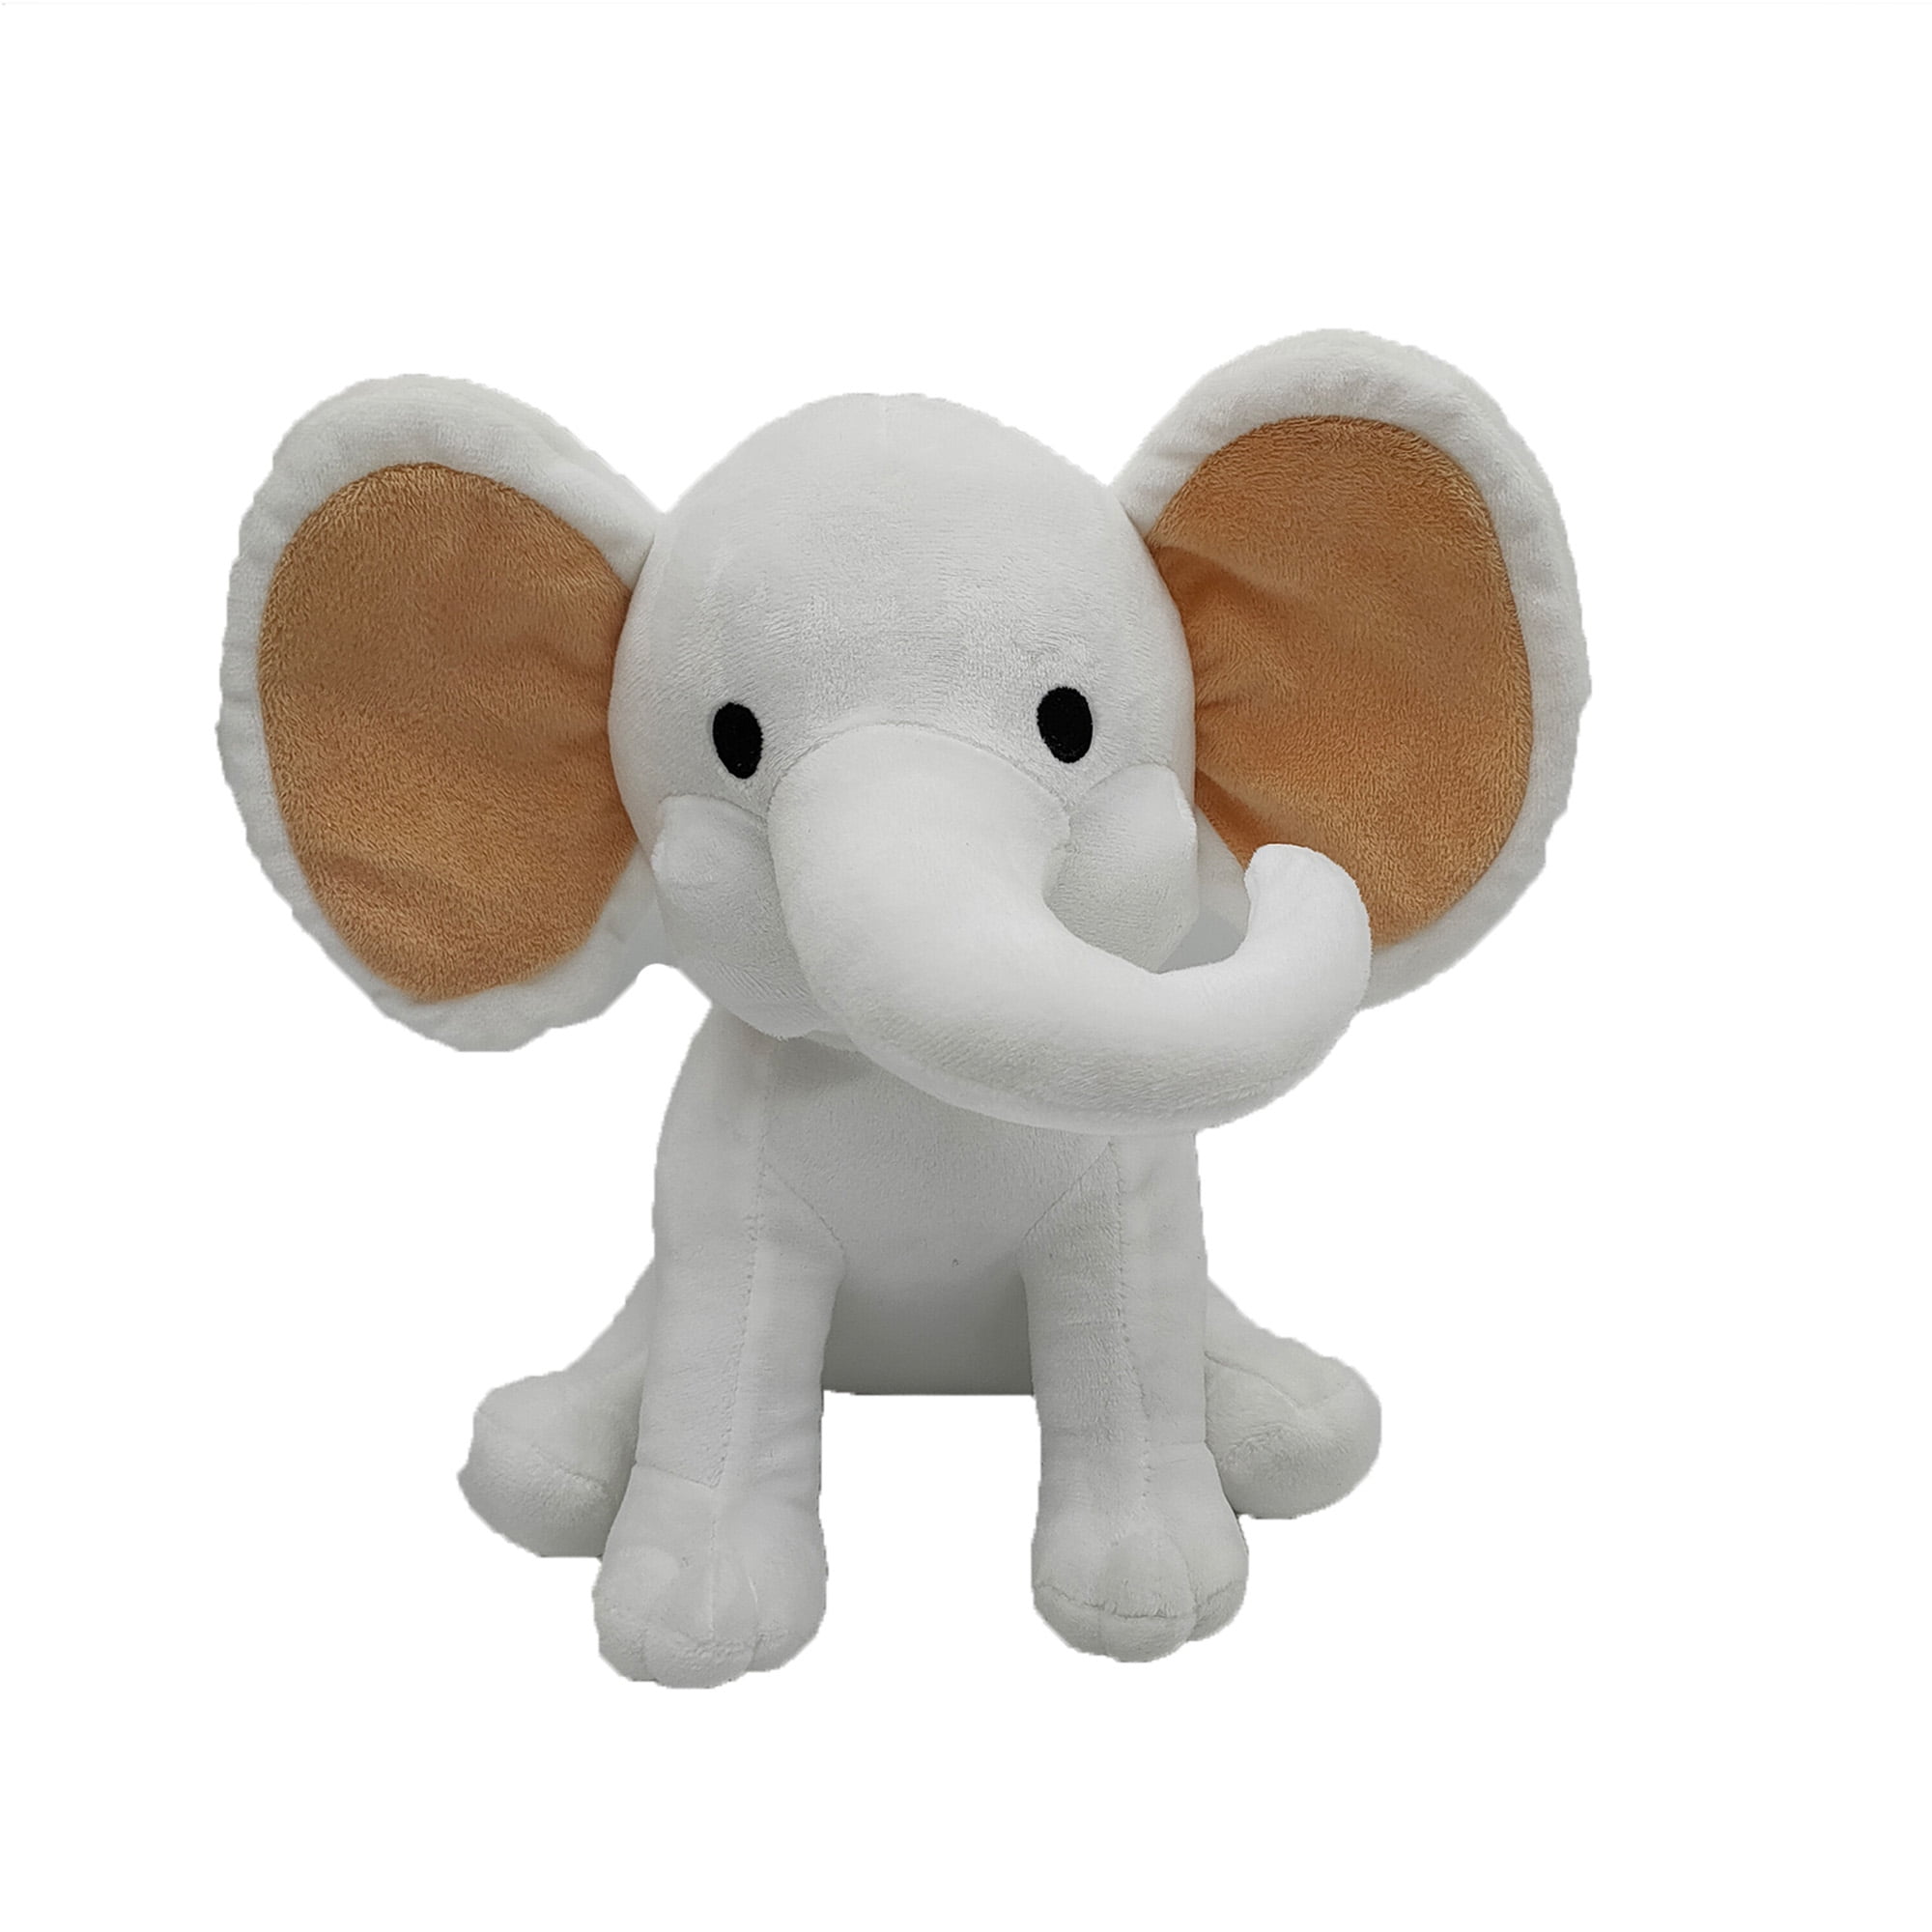  pobcesy Plush Toy Doll,60cm Plush Shark Pillow Removable Cute  Elephant Pants Super Soft Sofa Cushion Companion Plushies Funny Stuffed  Animal Doll Plush : Toys & Games